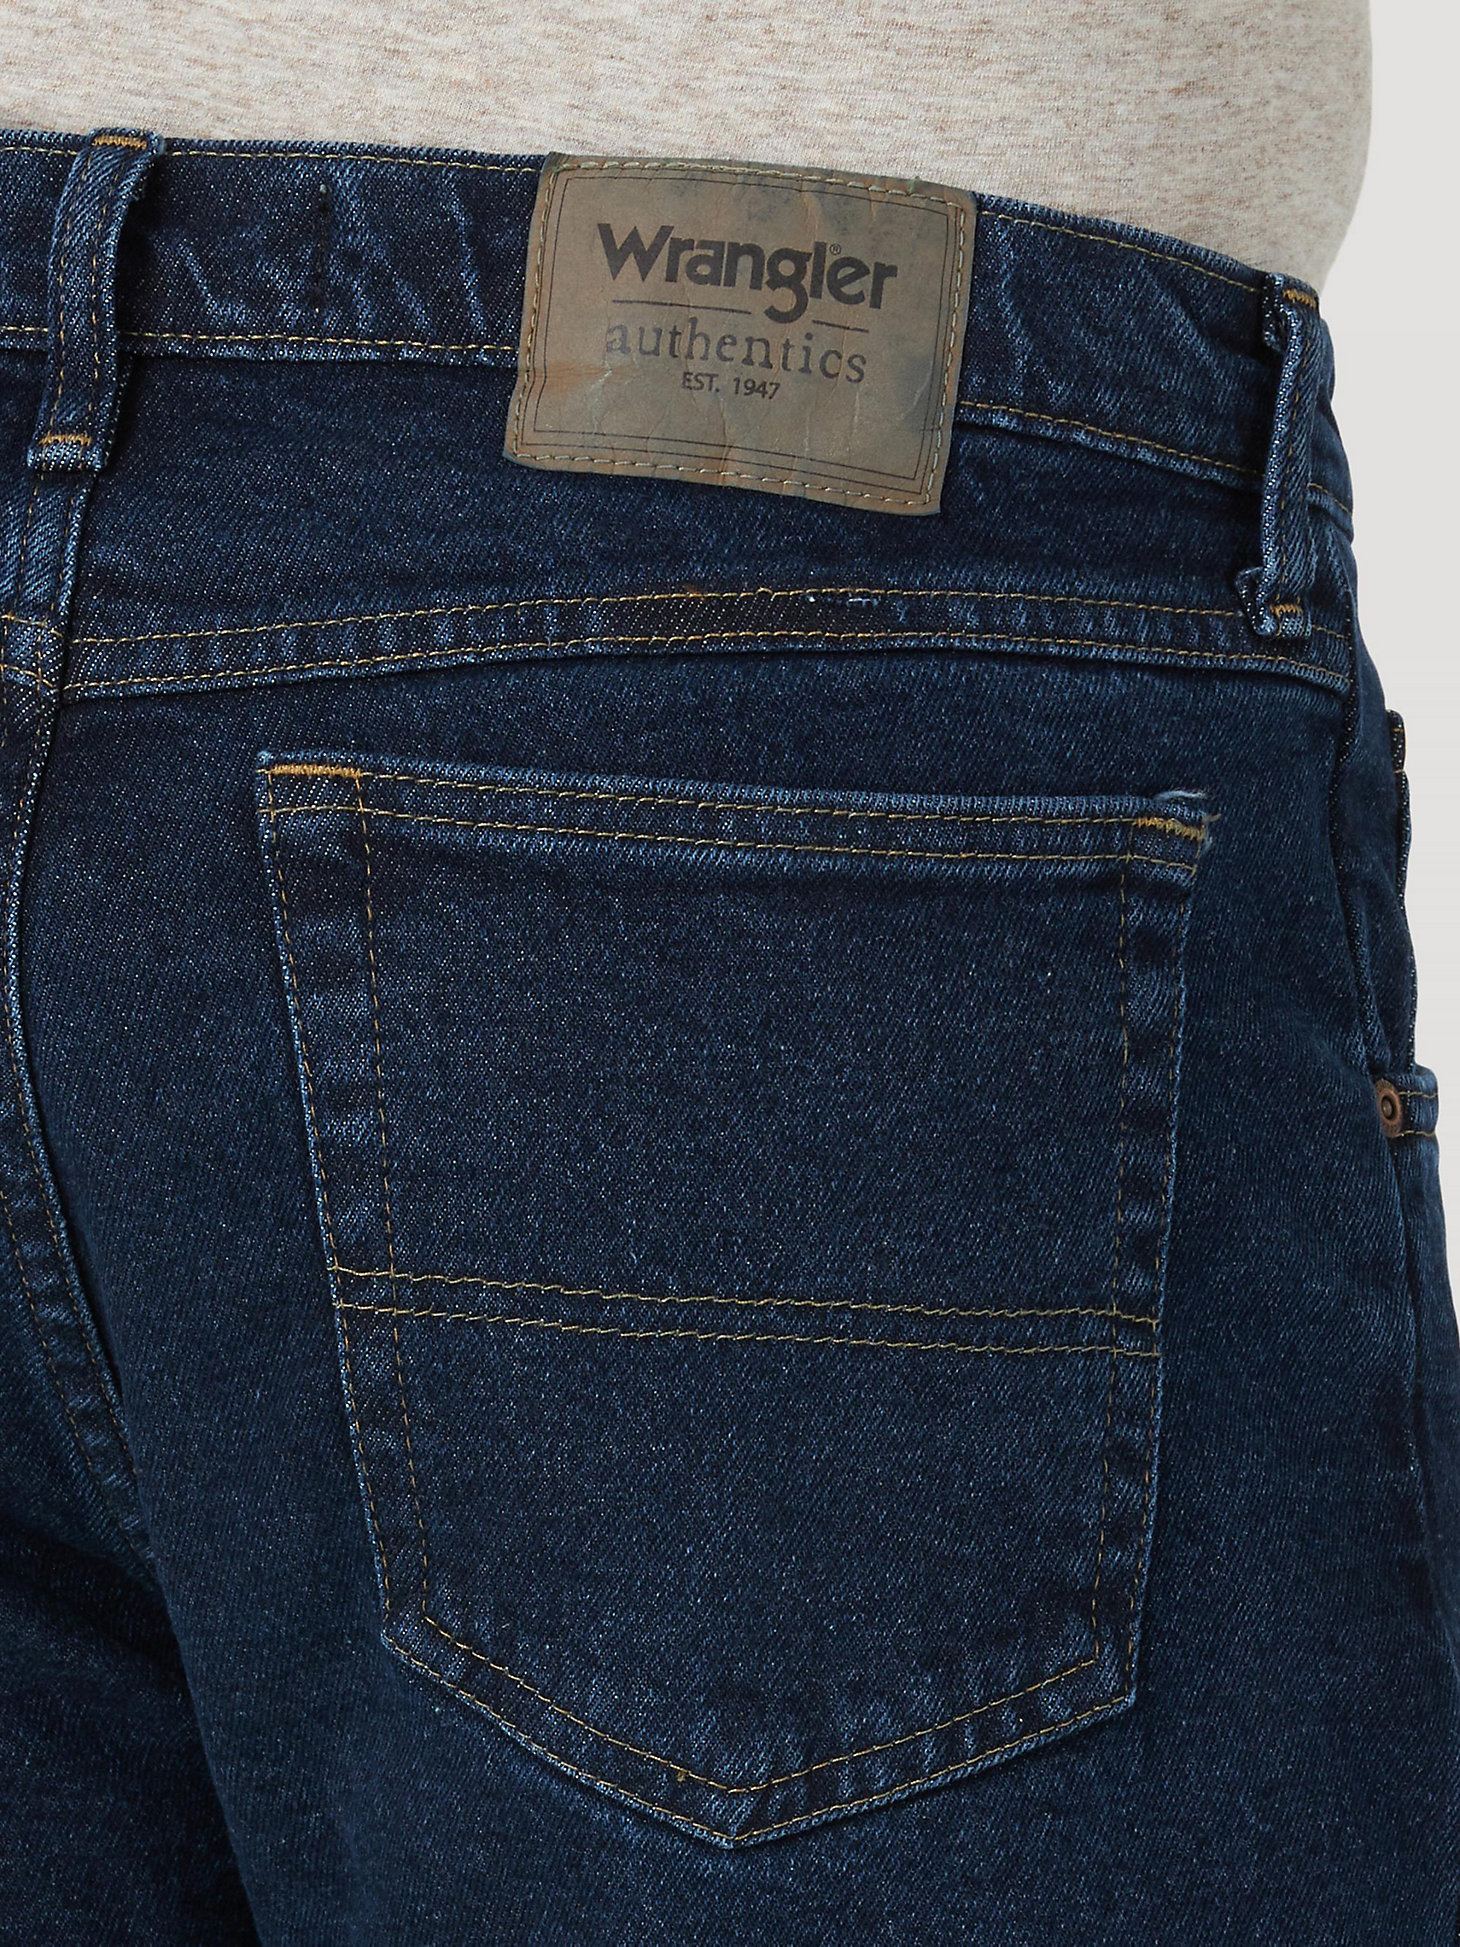 Men's Wrangler Authentics® Regular Fit Flex Jean in Midnight alternative view 3